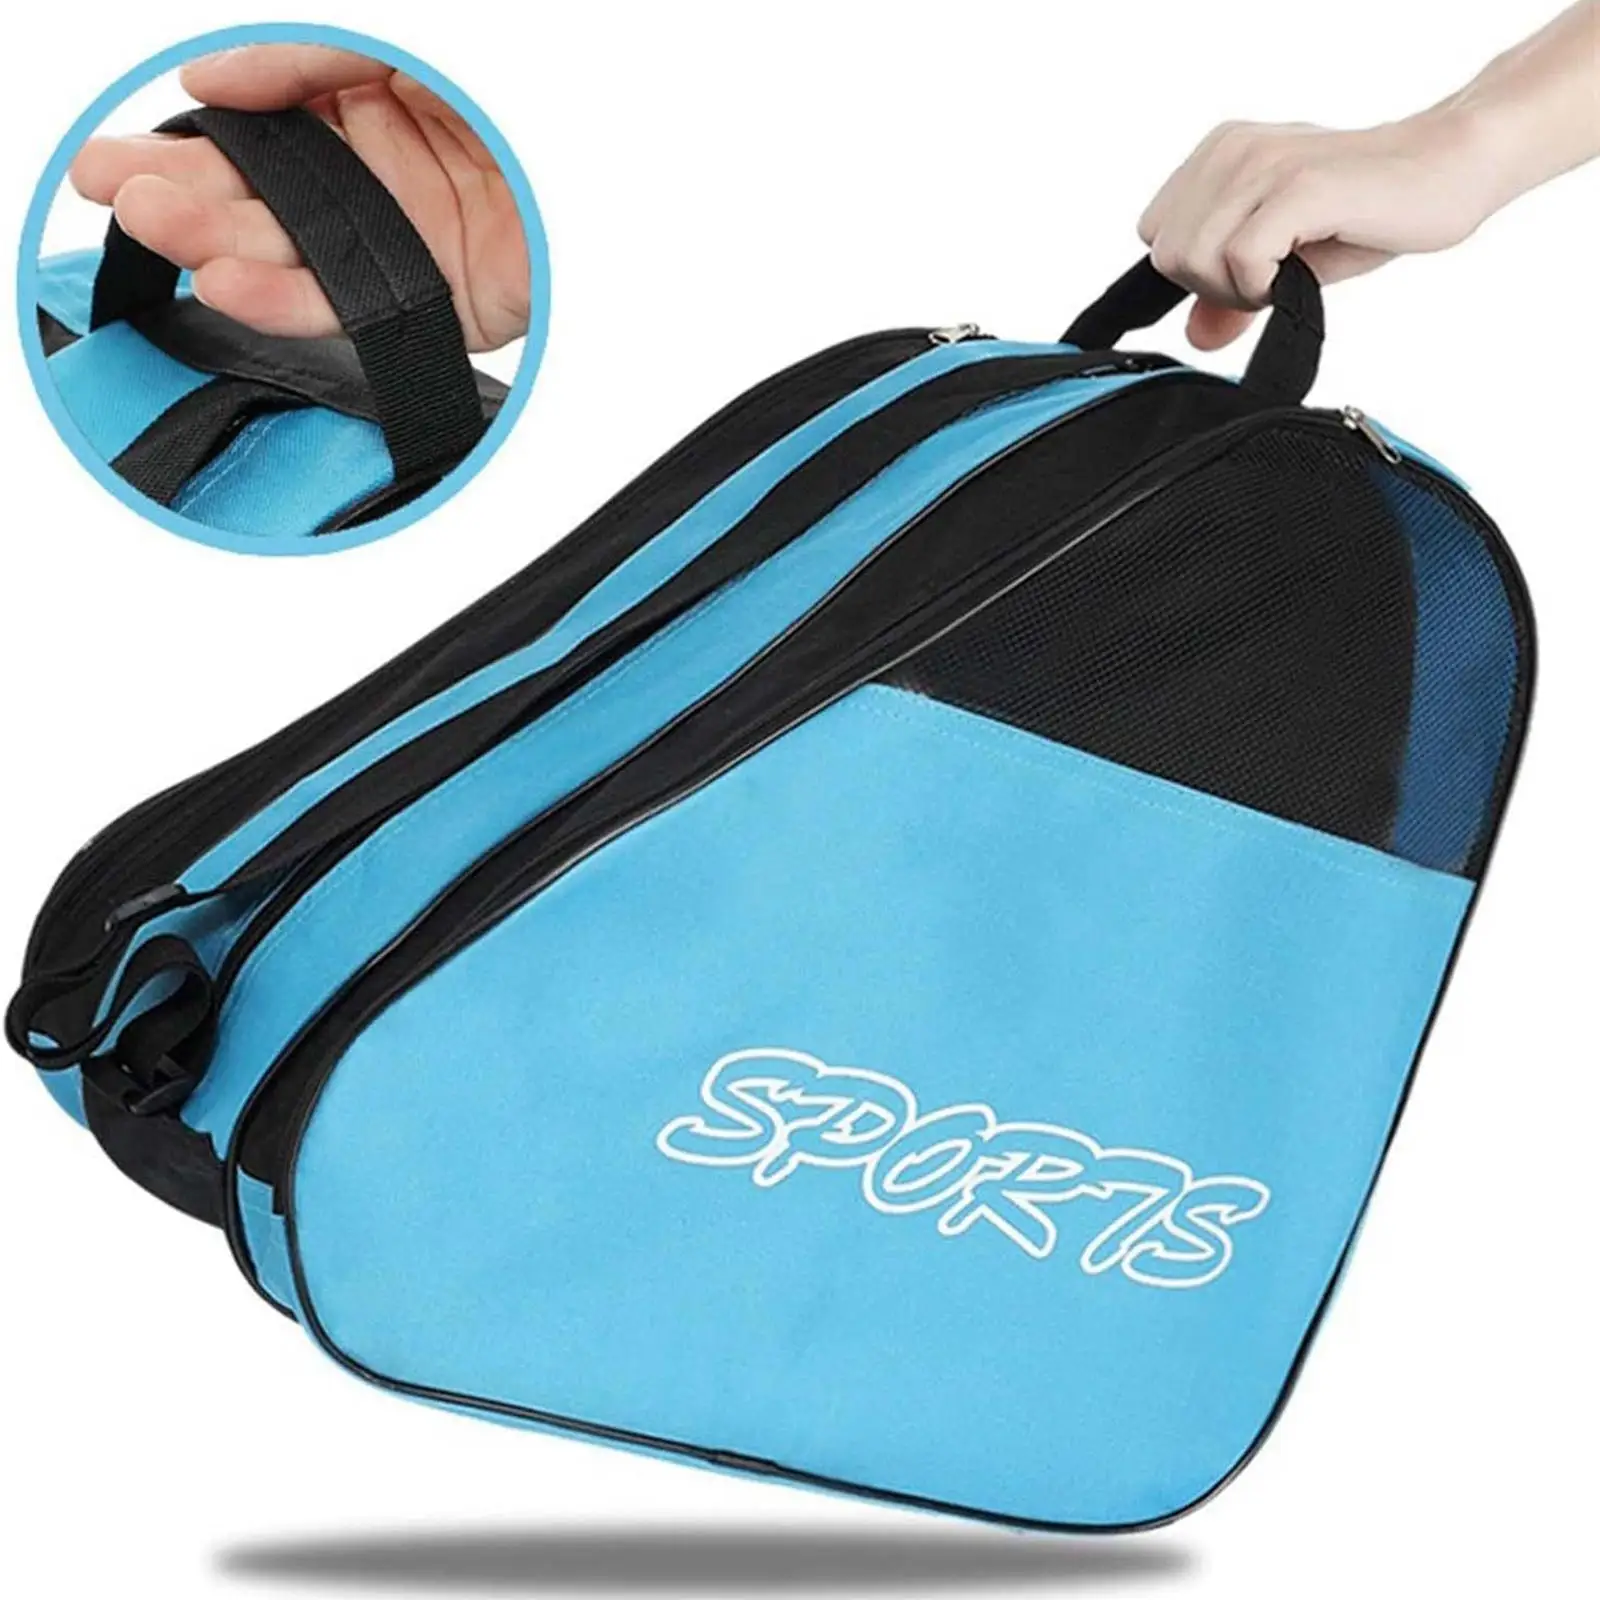 Roller Skates Bag Breathable Large Capacity Adjustable Strap Skating Handbag for Ice Hockey Skate Inline Skates Figure Skates